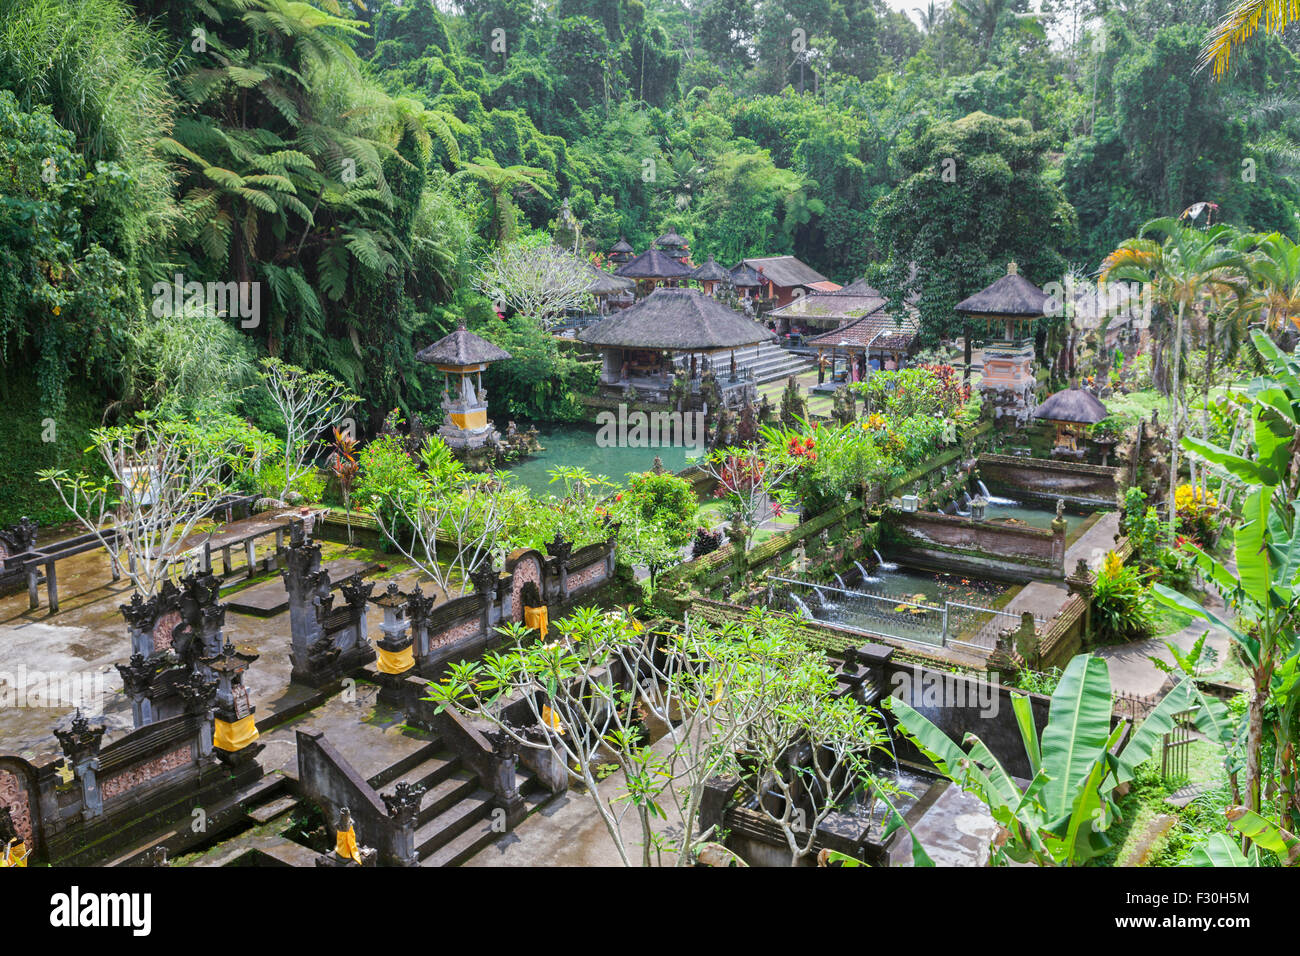 The holy springs at Pura Gunung Kawi Sebatu temple, Bali